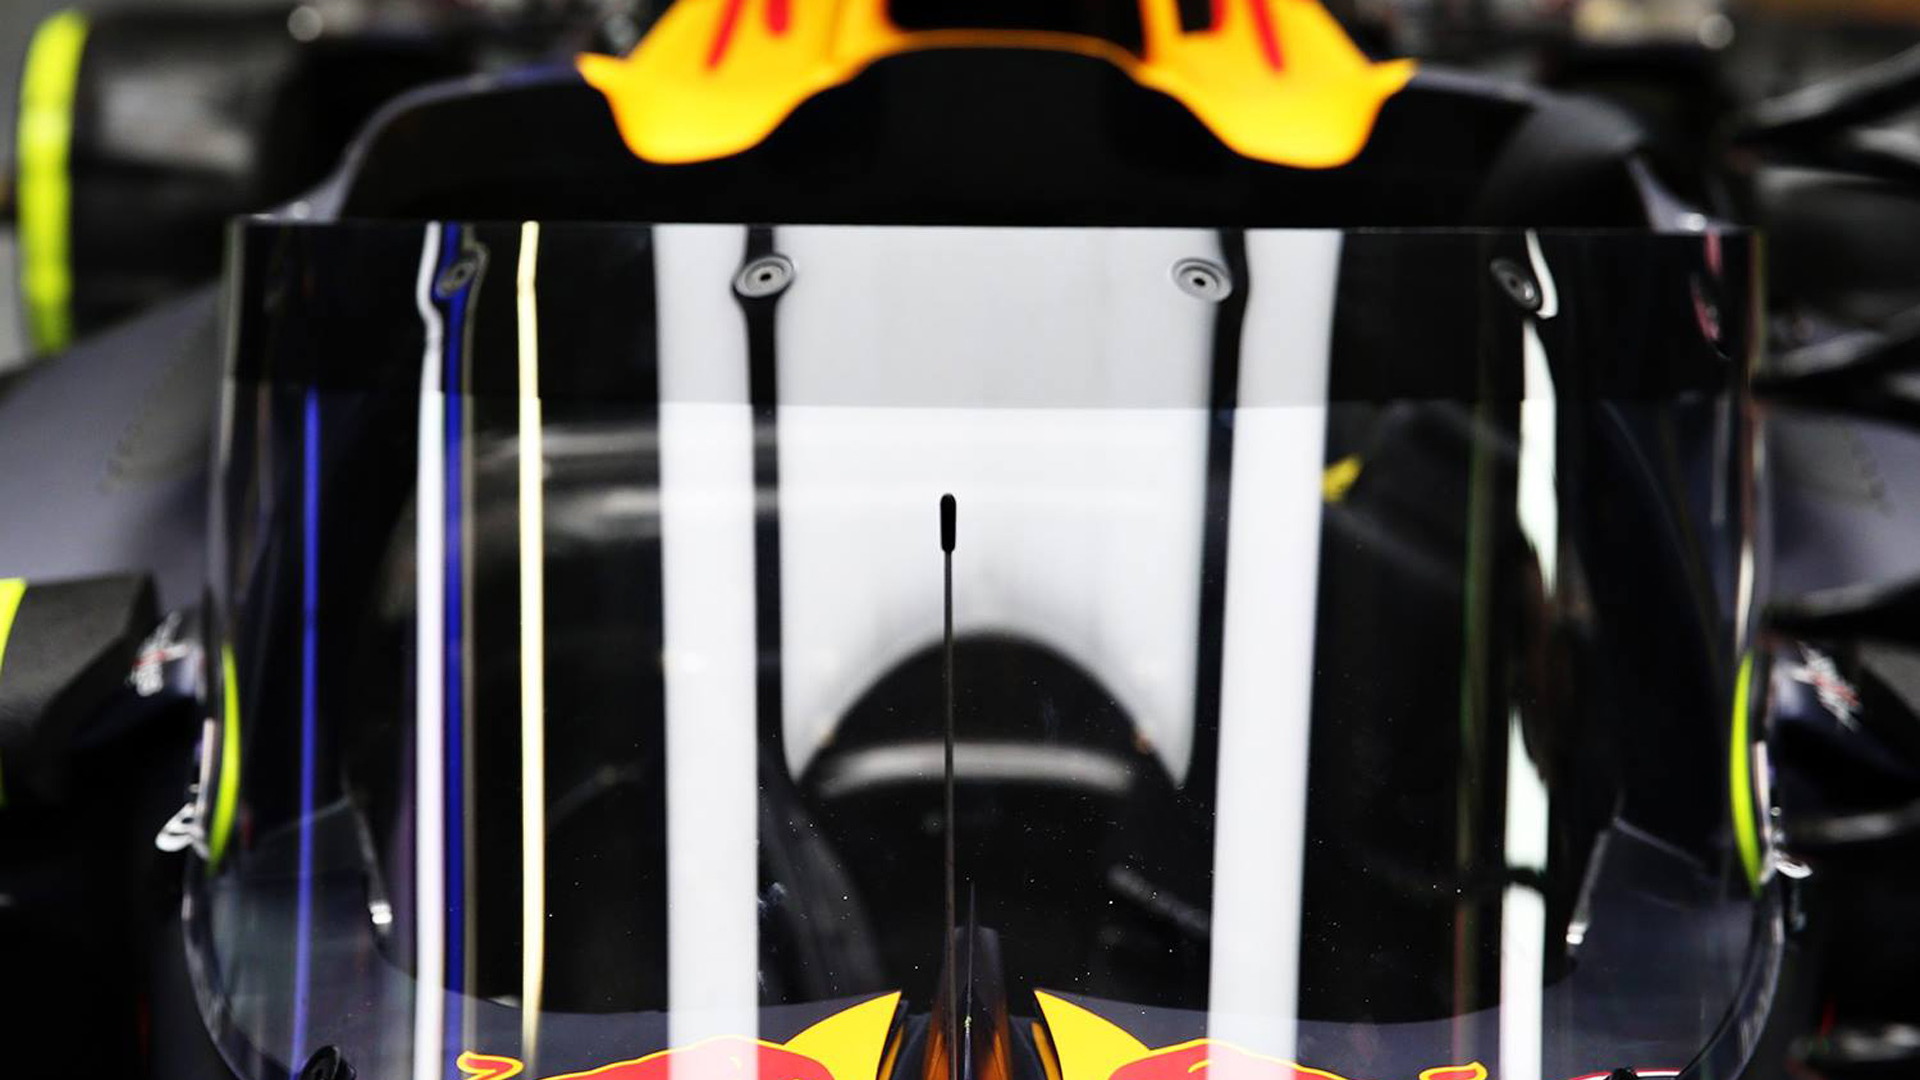 Red Bull Racing Aeroscreen cockpit protection